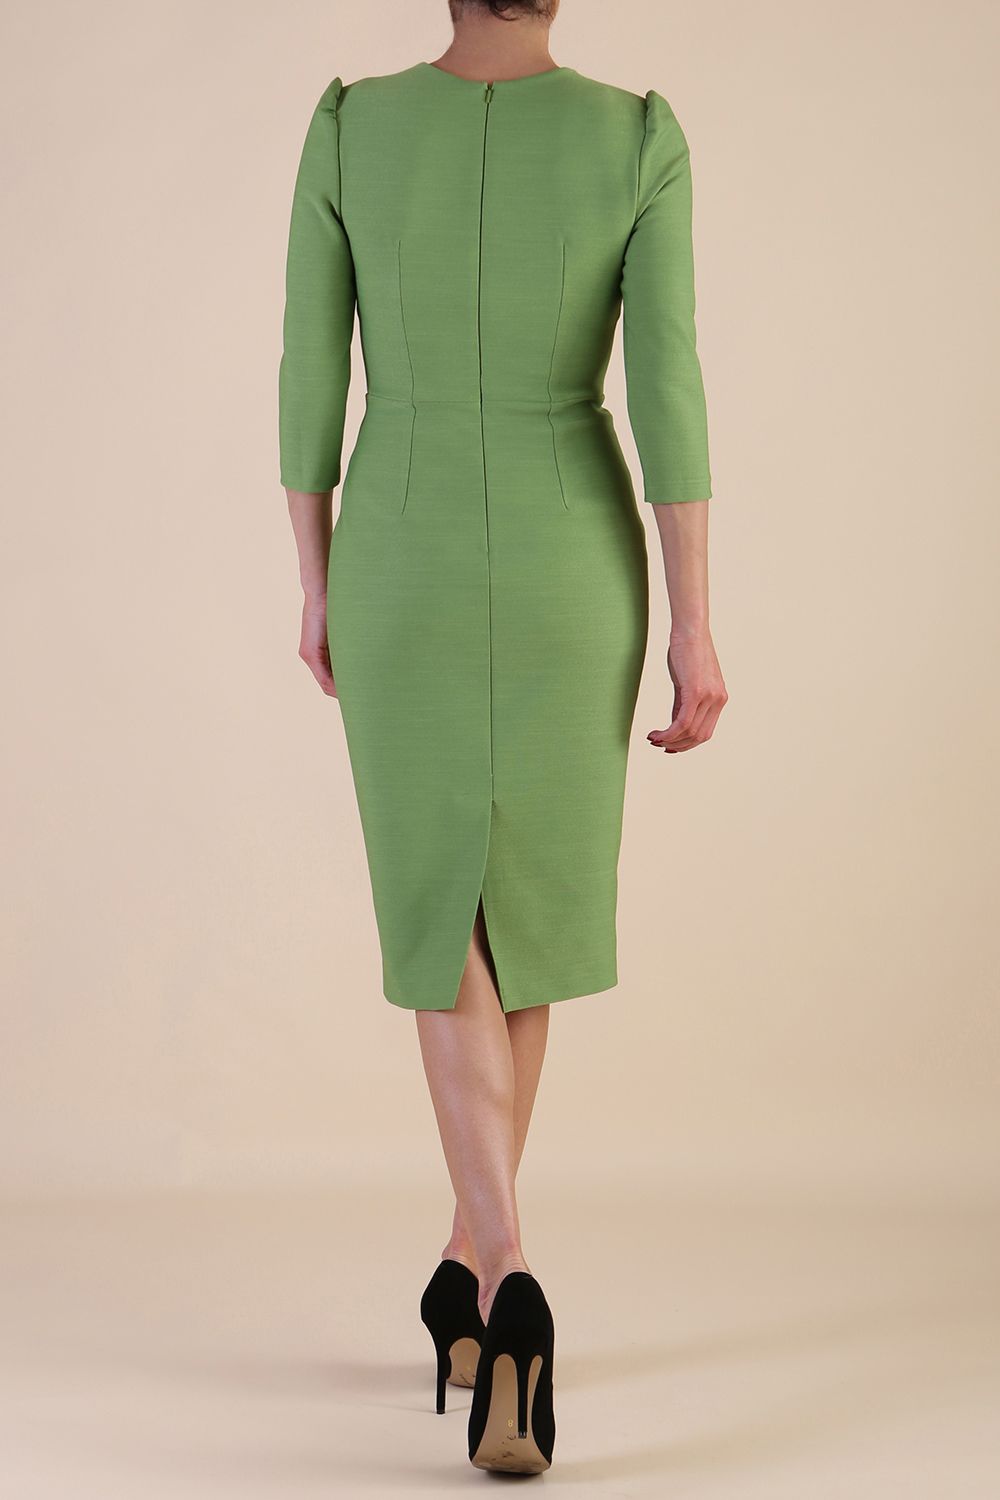 Model wearing diva catwalk Aurelia 3/4 Sleeve Knee Lenght Pencil Dress in Citus Green back